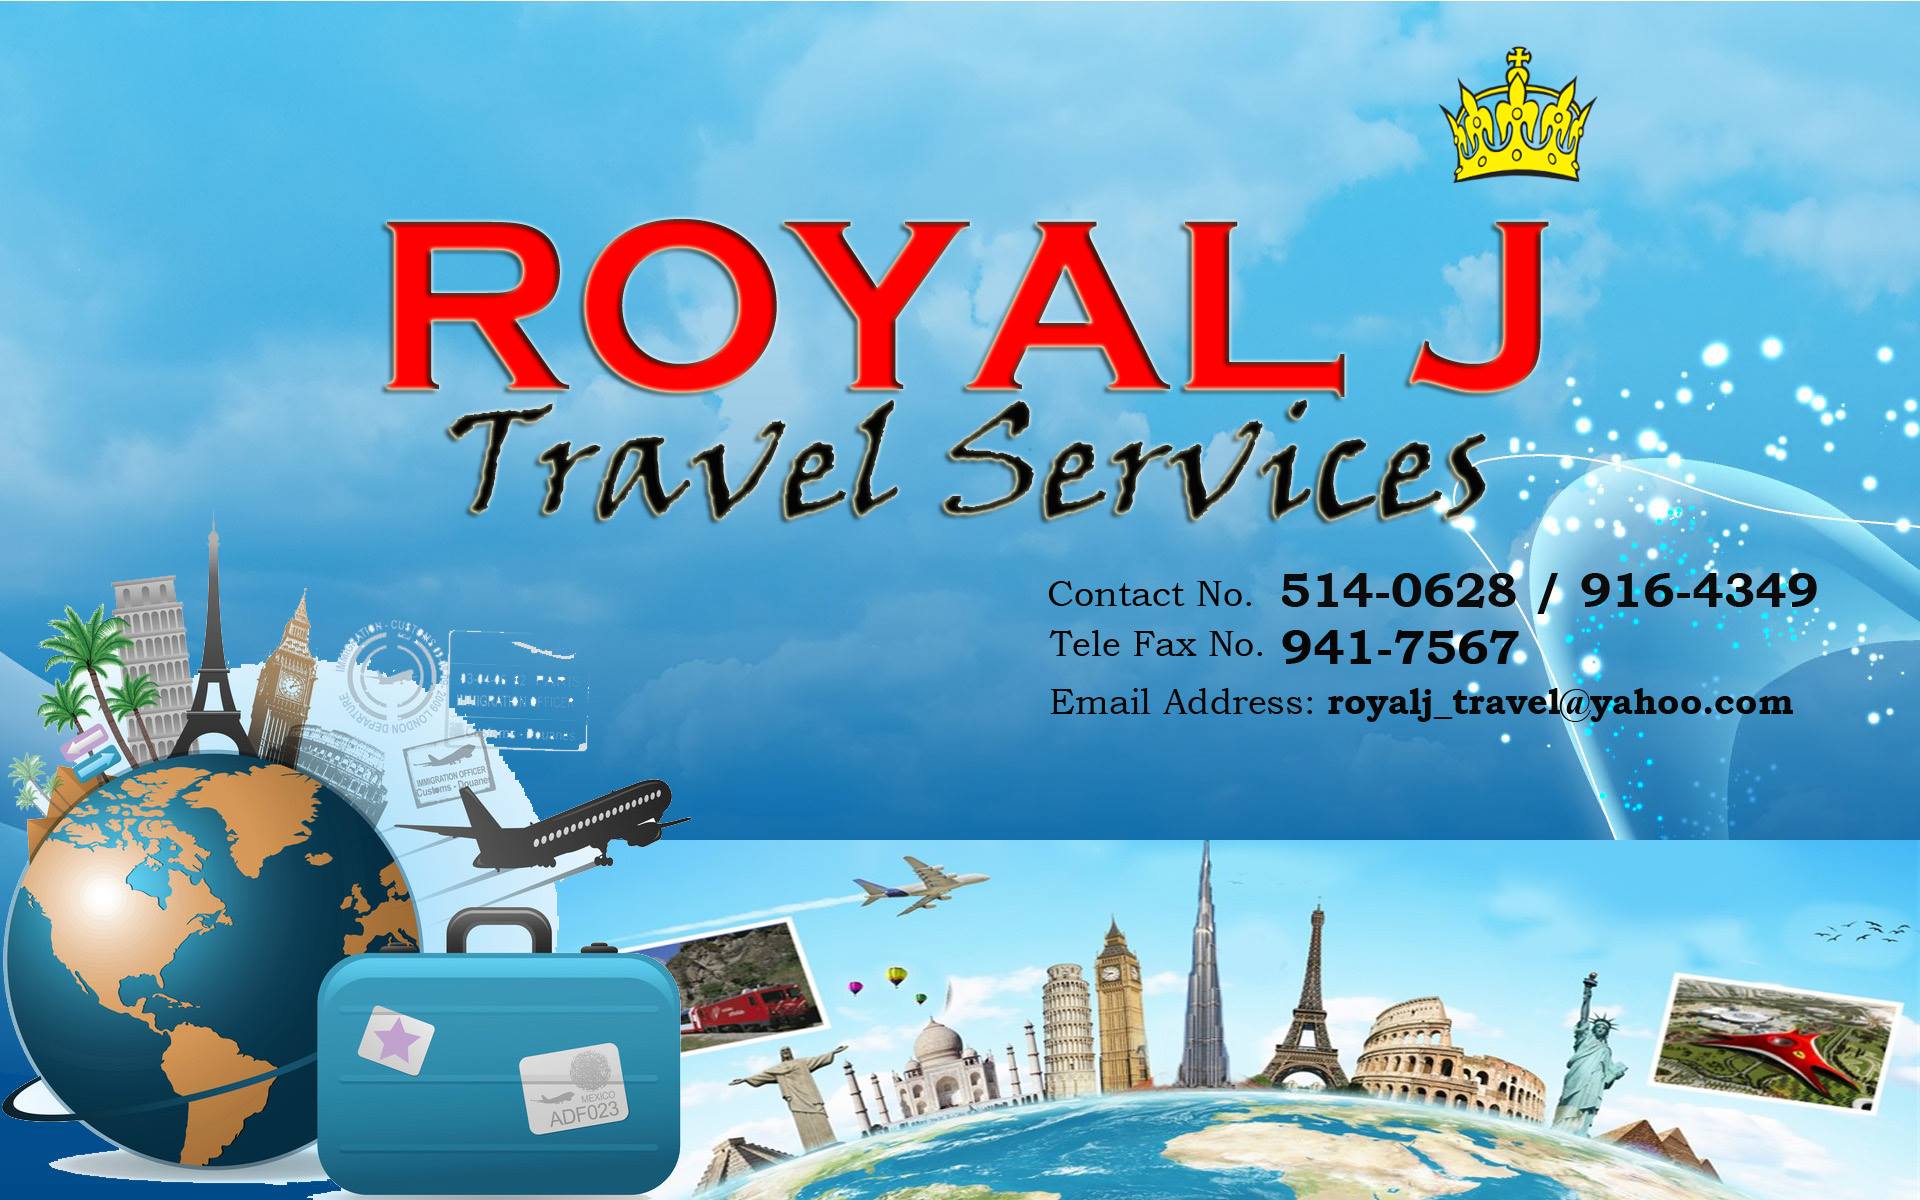 Royal J Travel Services